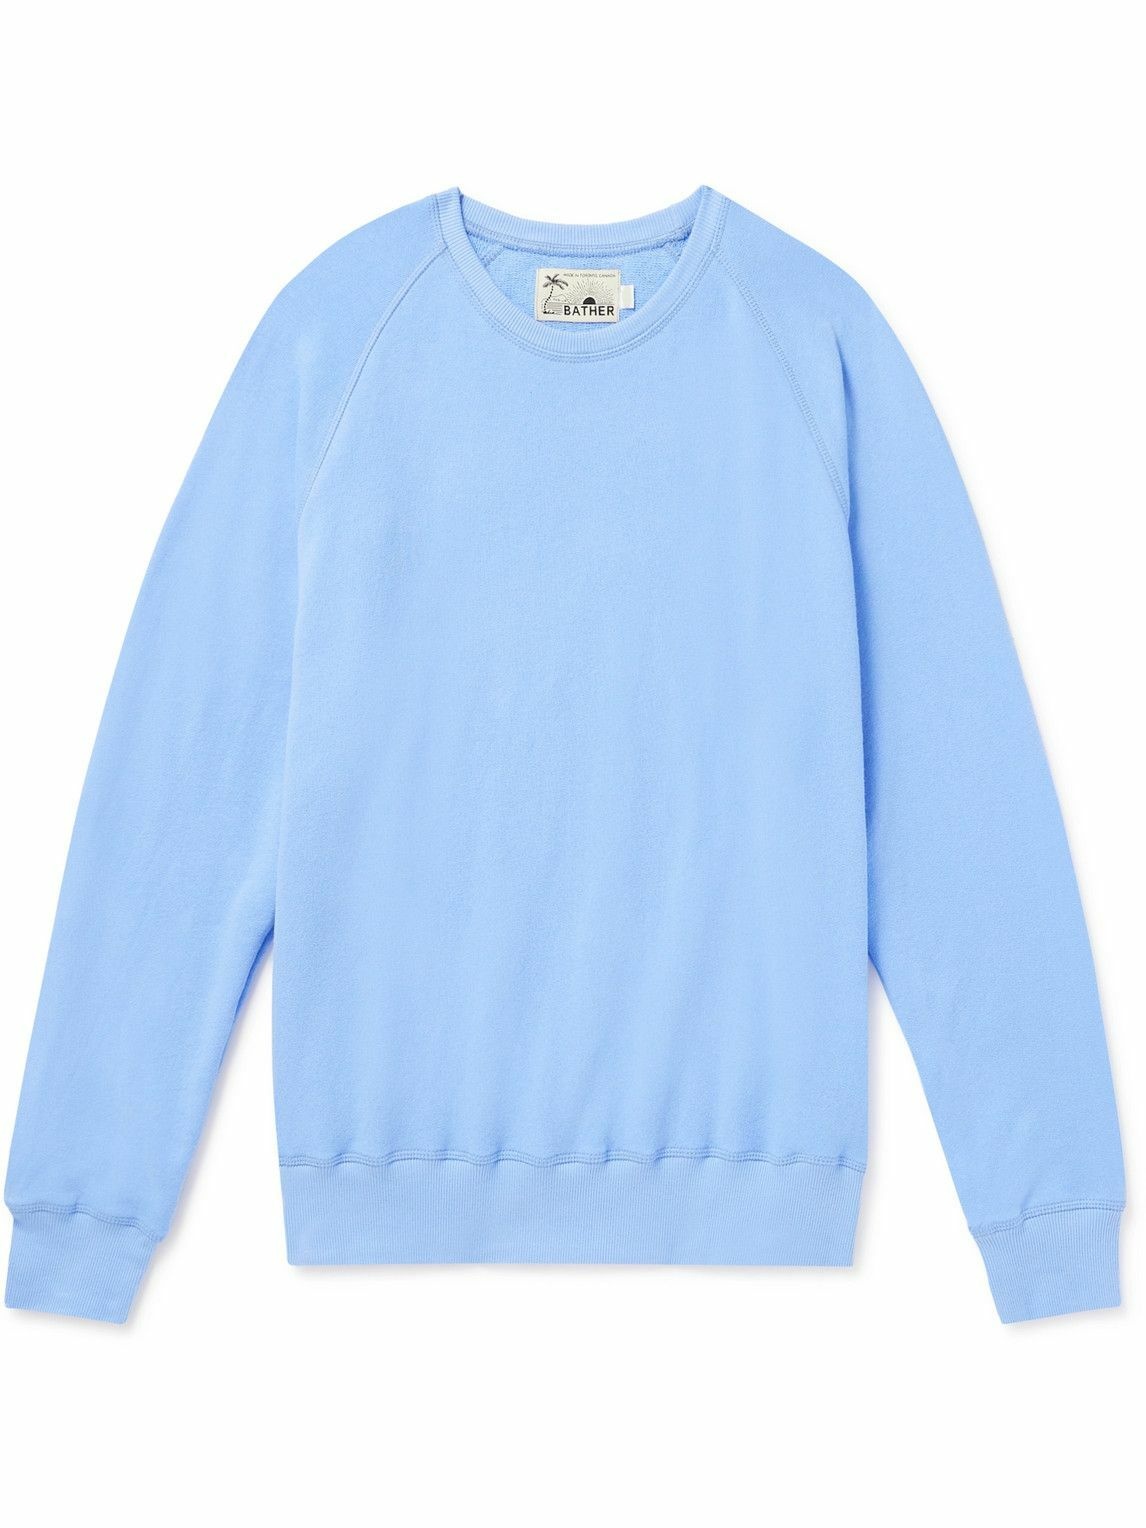 Bather - Organic Cotton-Jersey Sweatshirt - Blue Bather